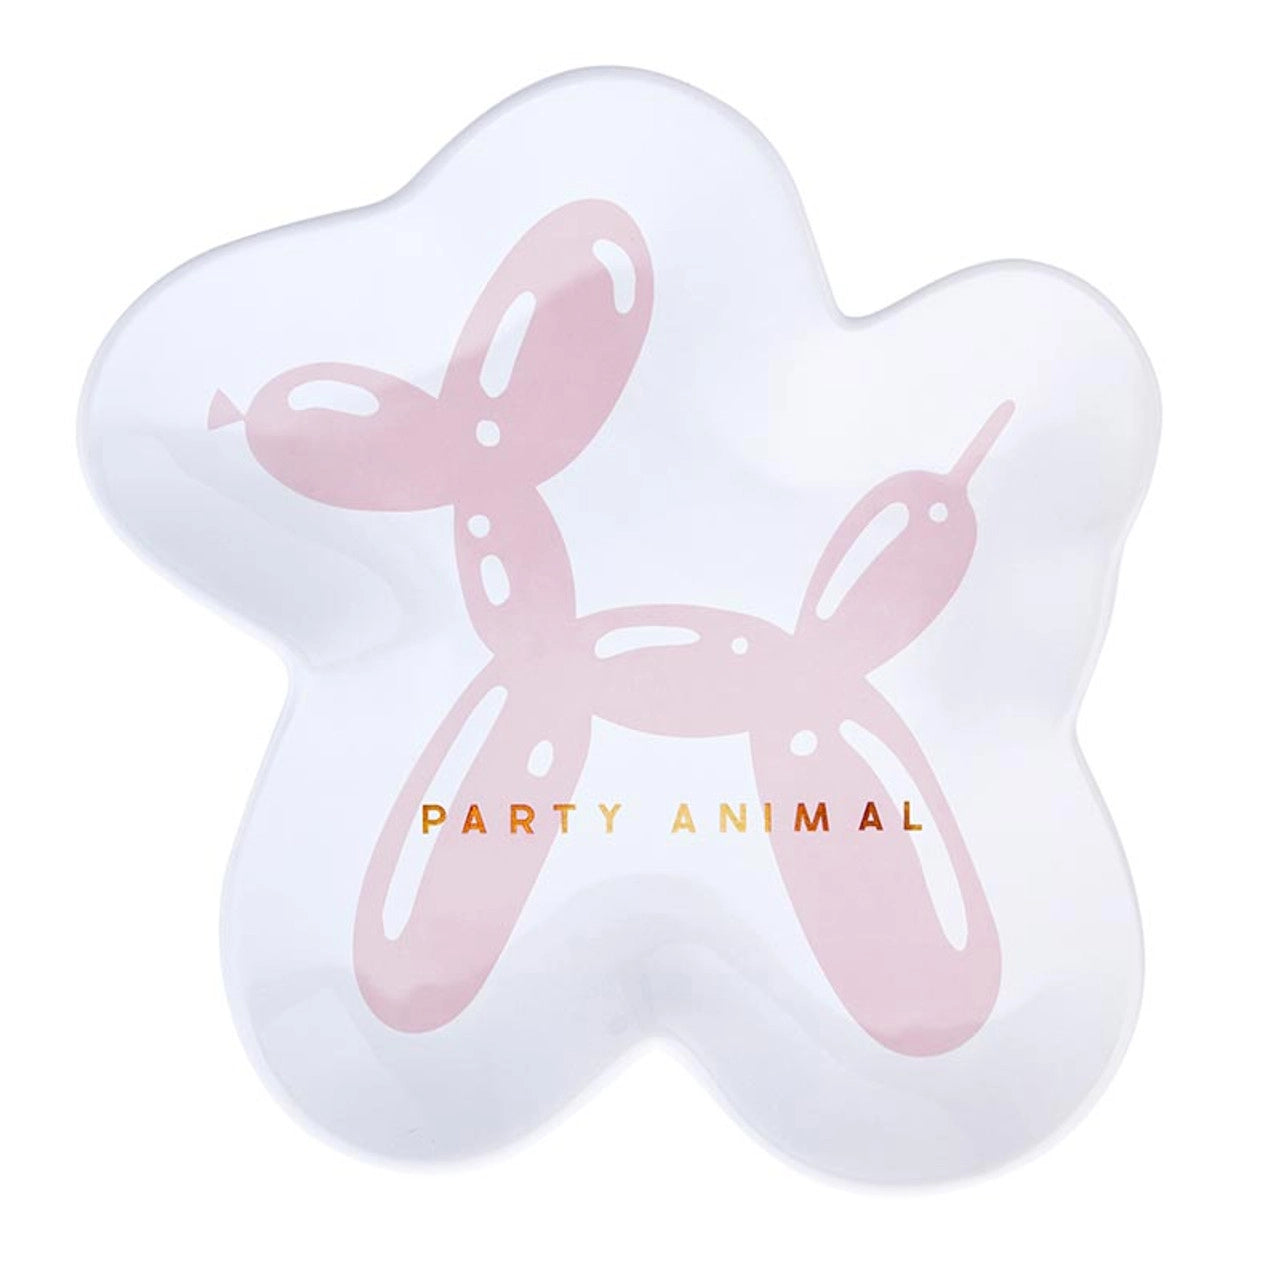 Ceramic Plate: Party Animal